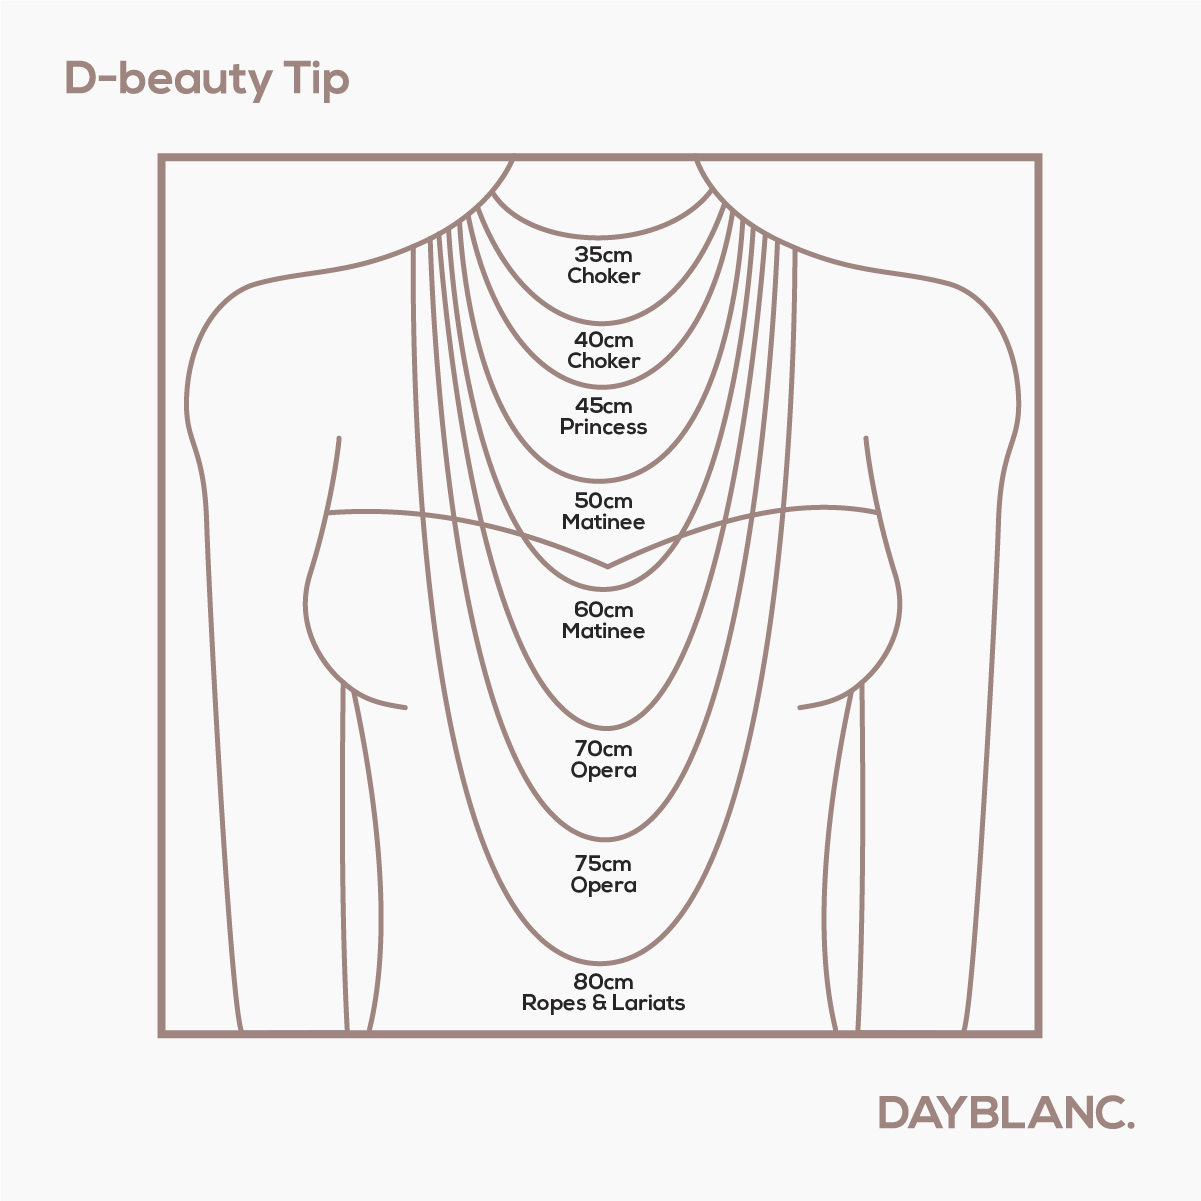 Necklace Chain Customise - DAYBLANC